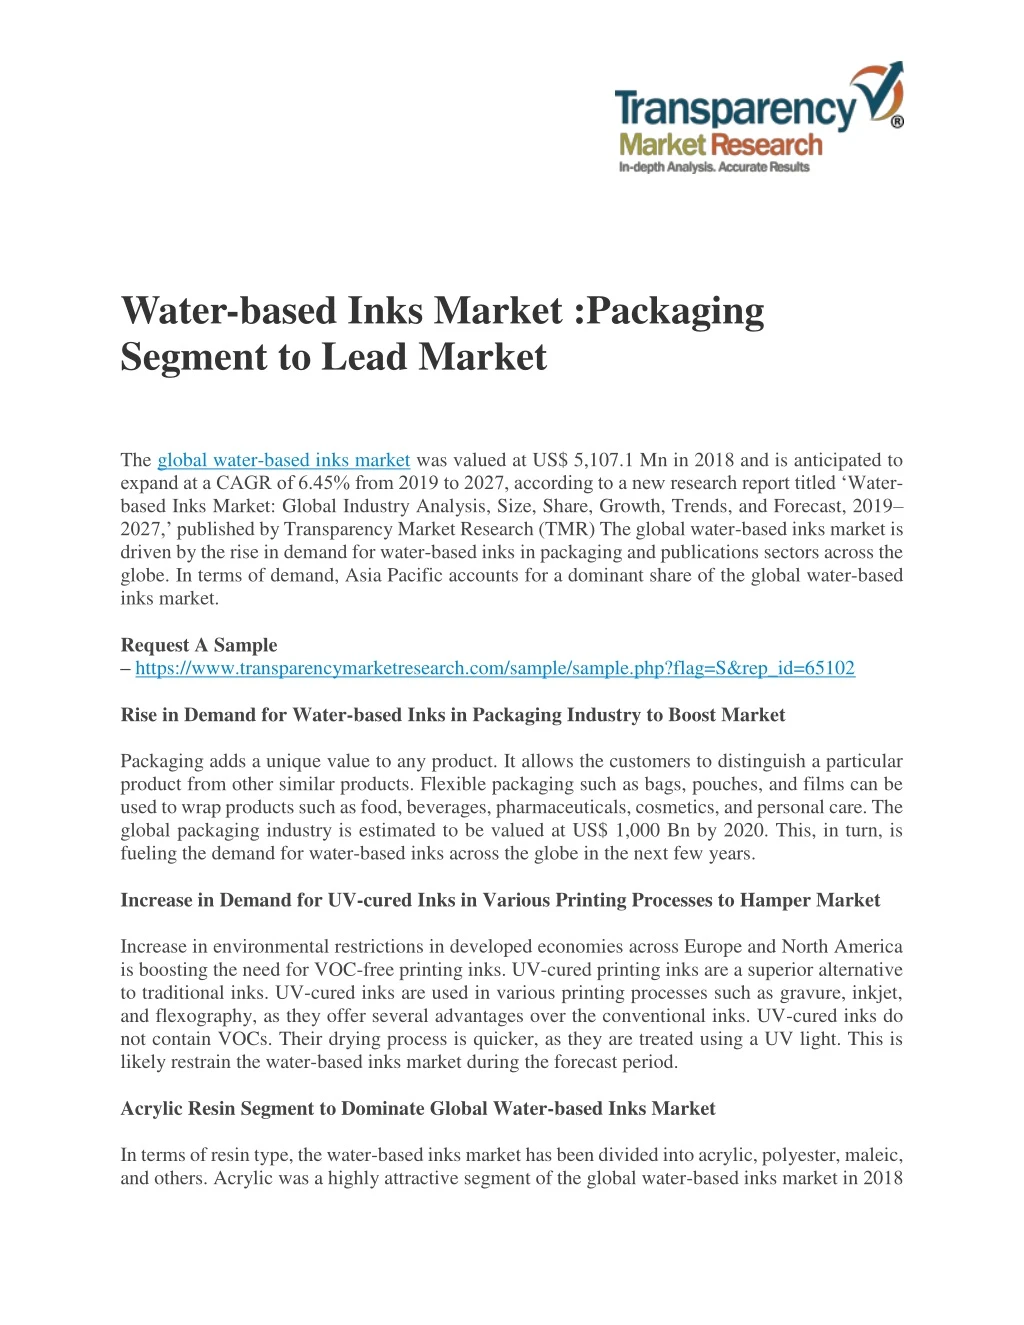 water based inks market packaging segment to lead